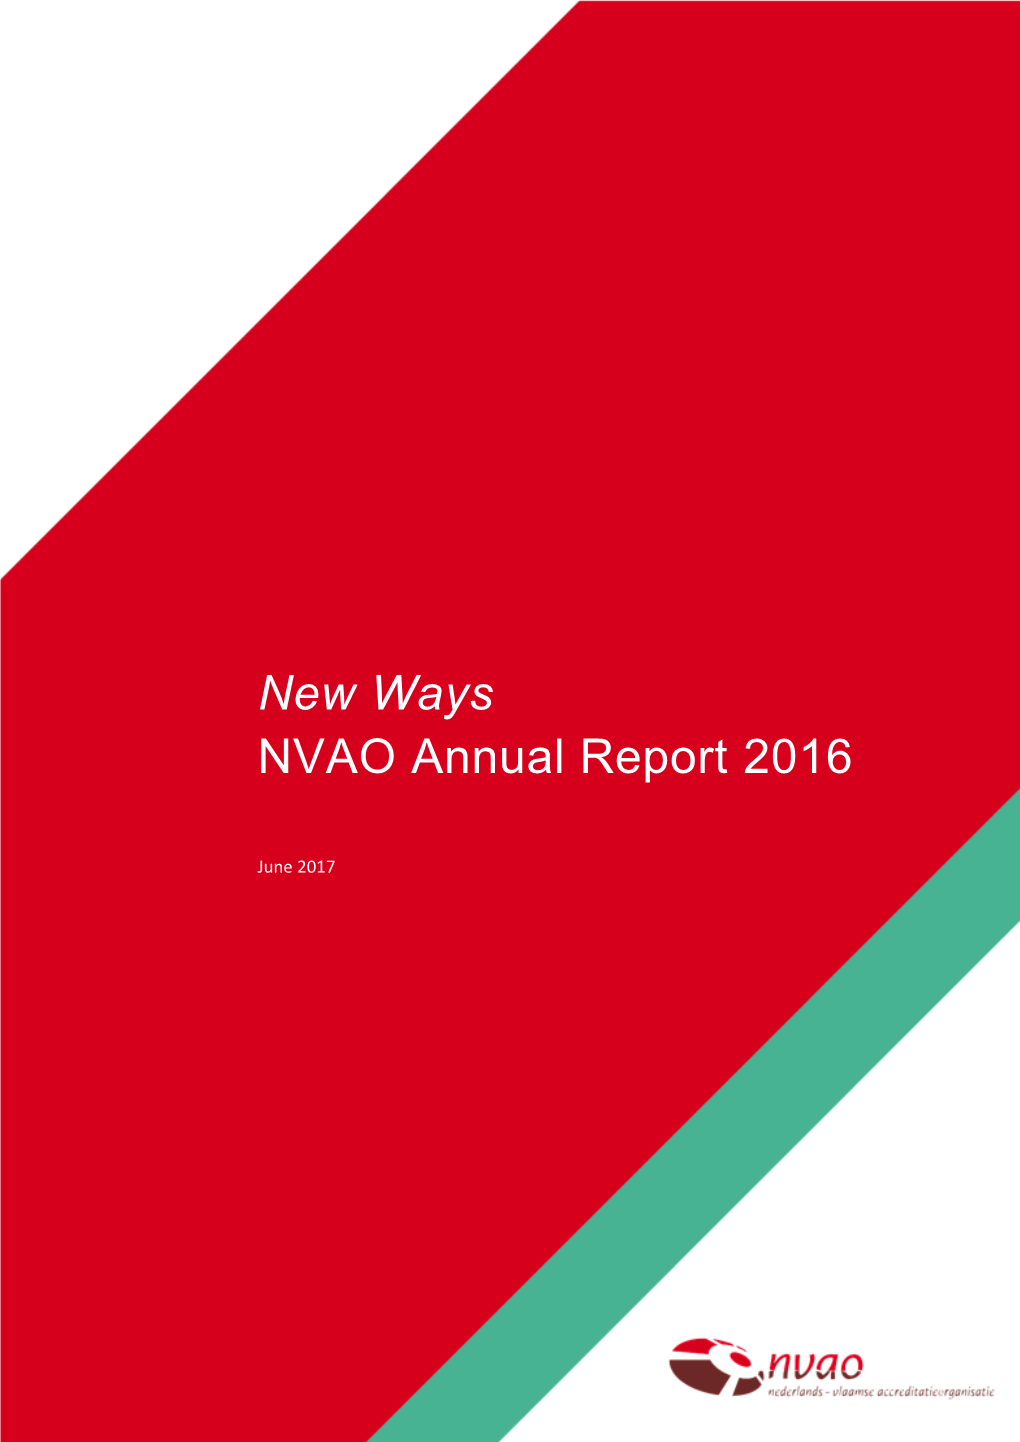 NVAO Annual Report 2016 Summary